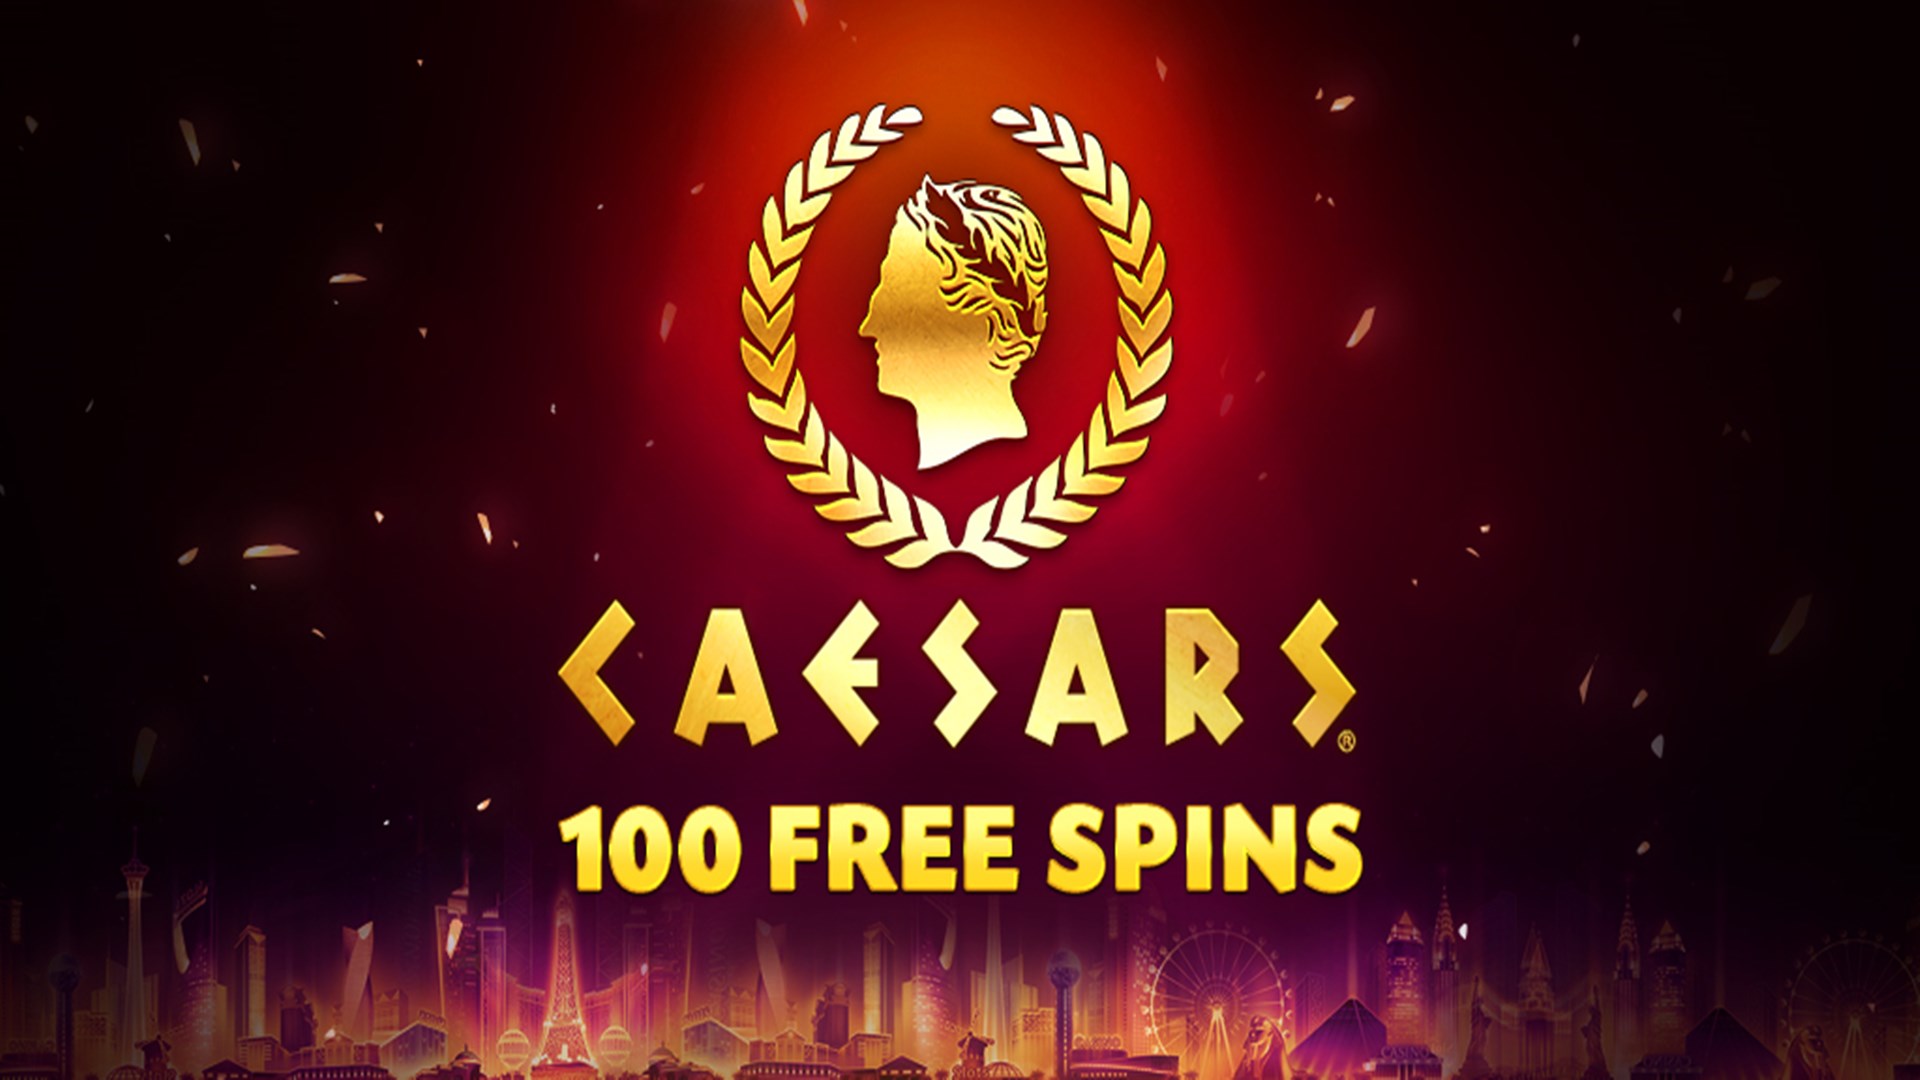 Caesars casino online free slots online roulette uk